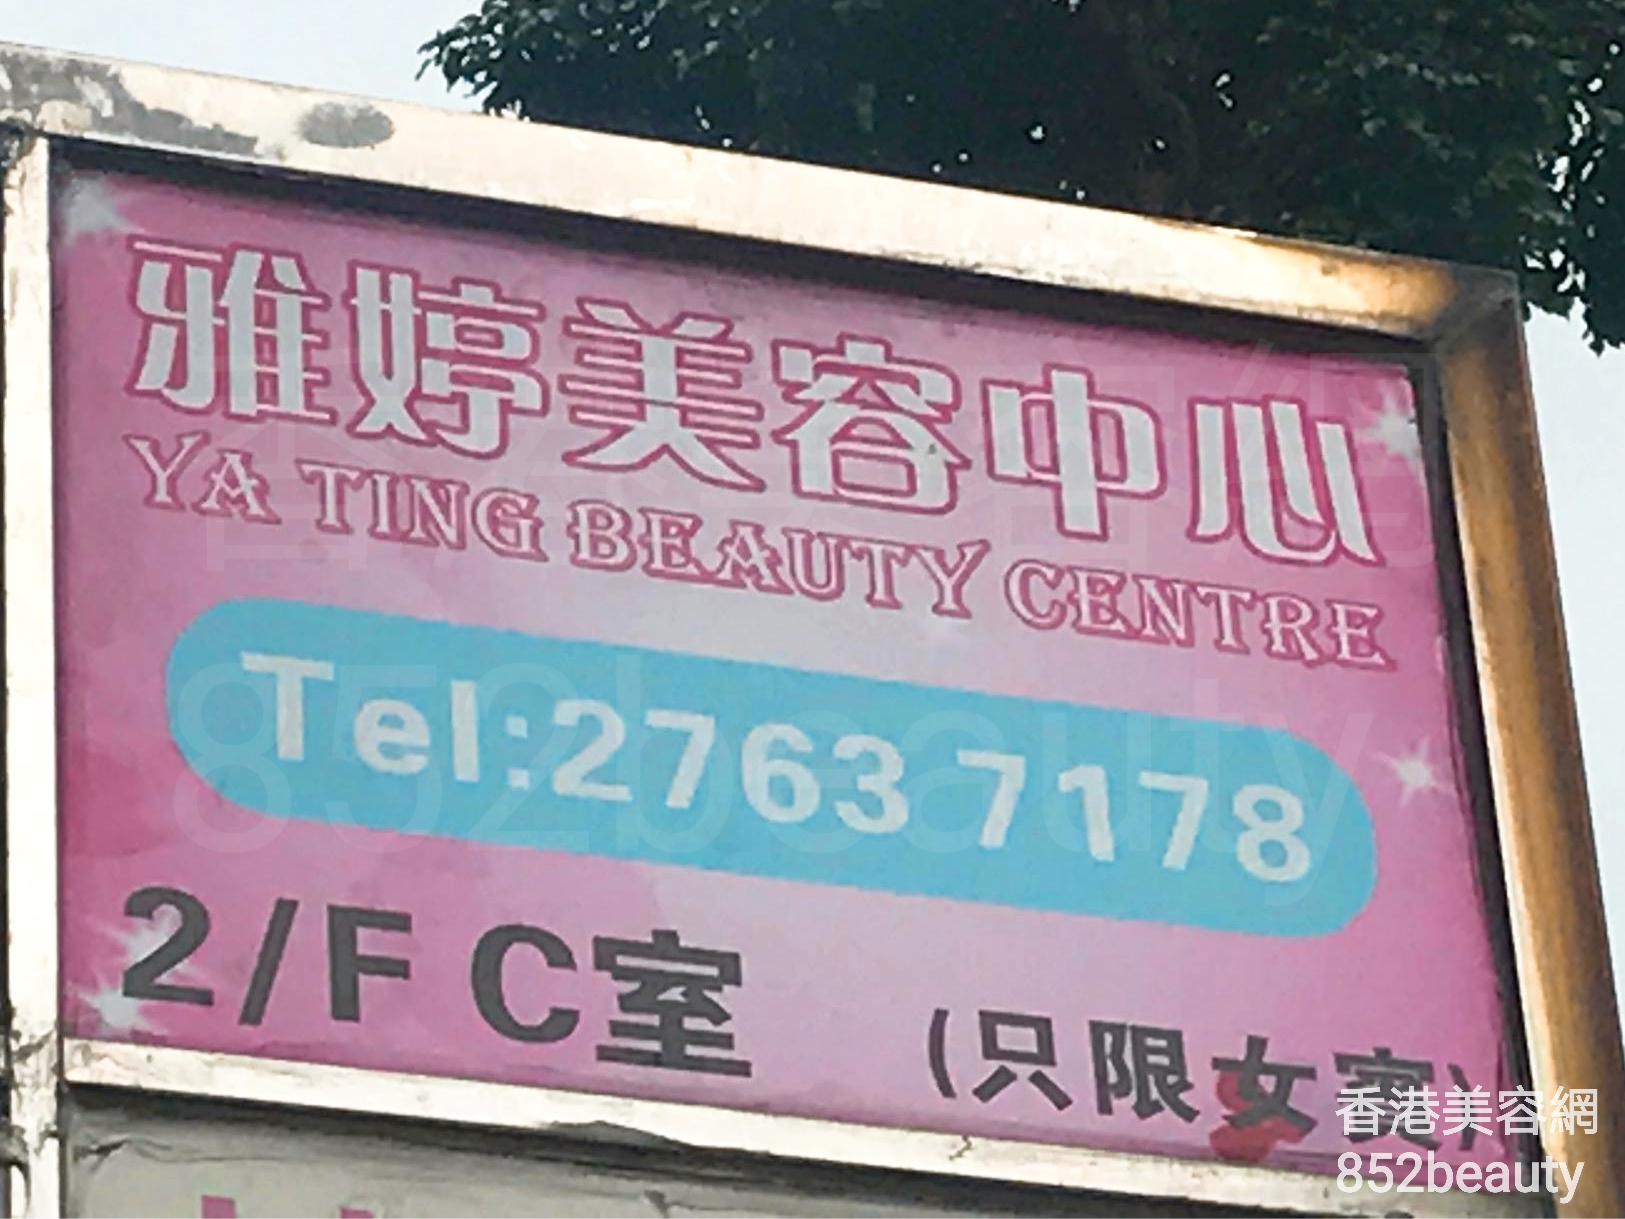 脫毛: 雅婷美容中心 Ya Ting Beauty Centre